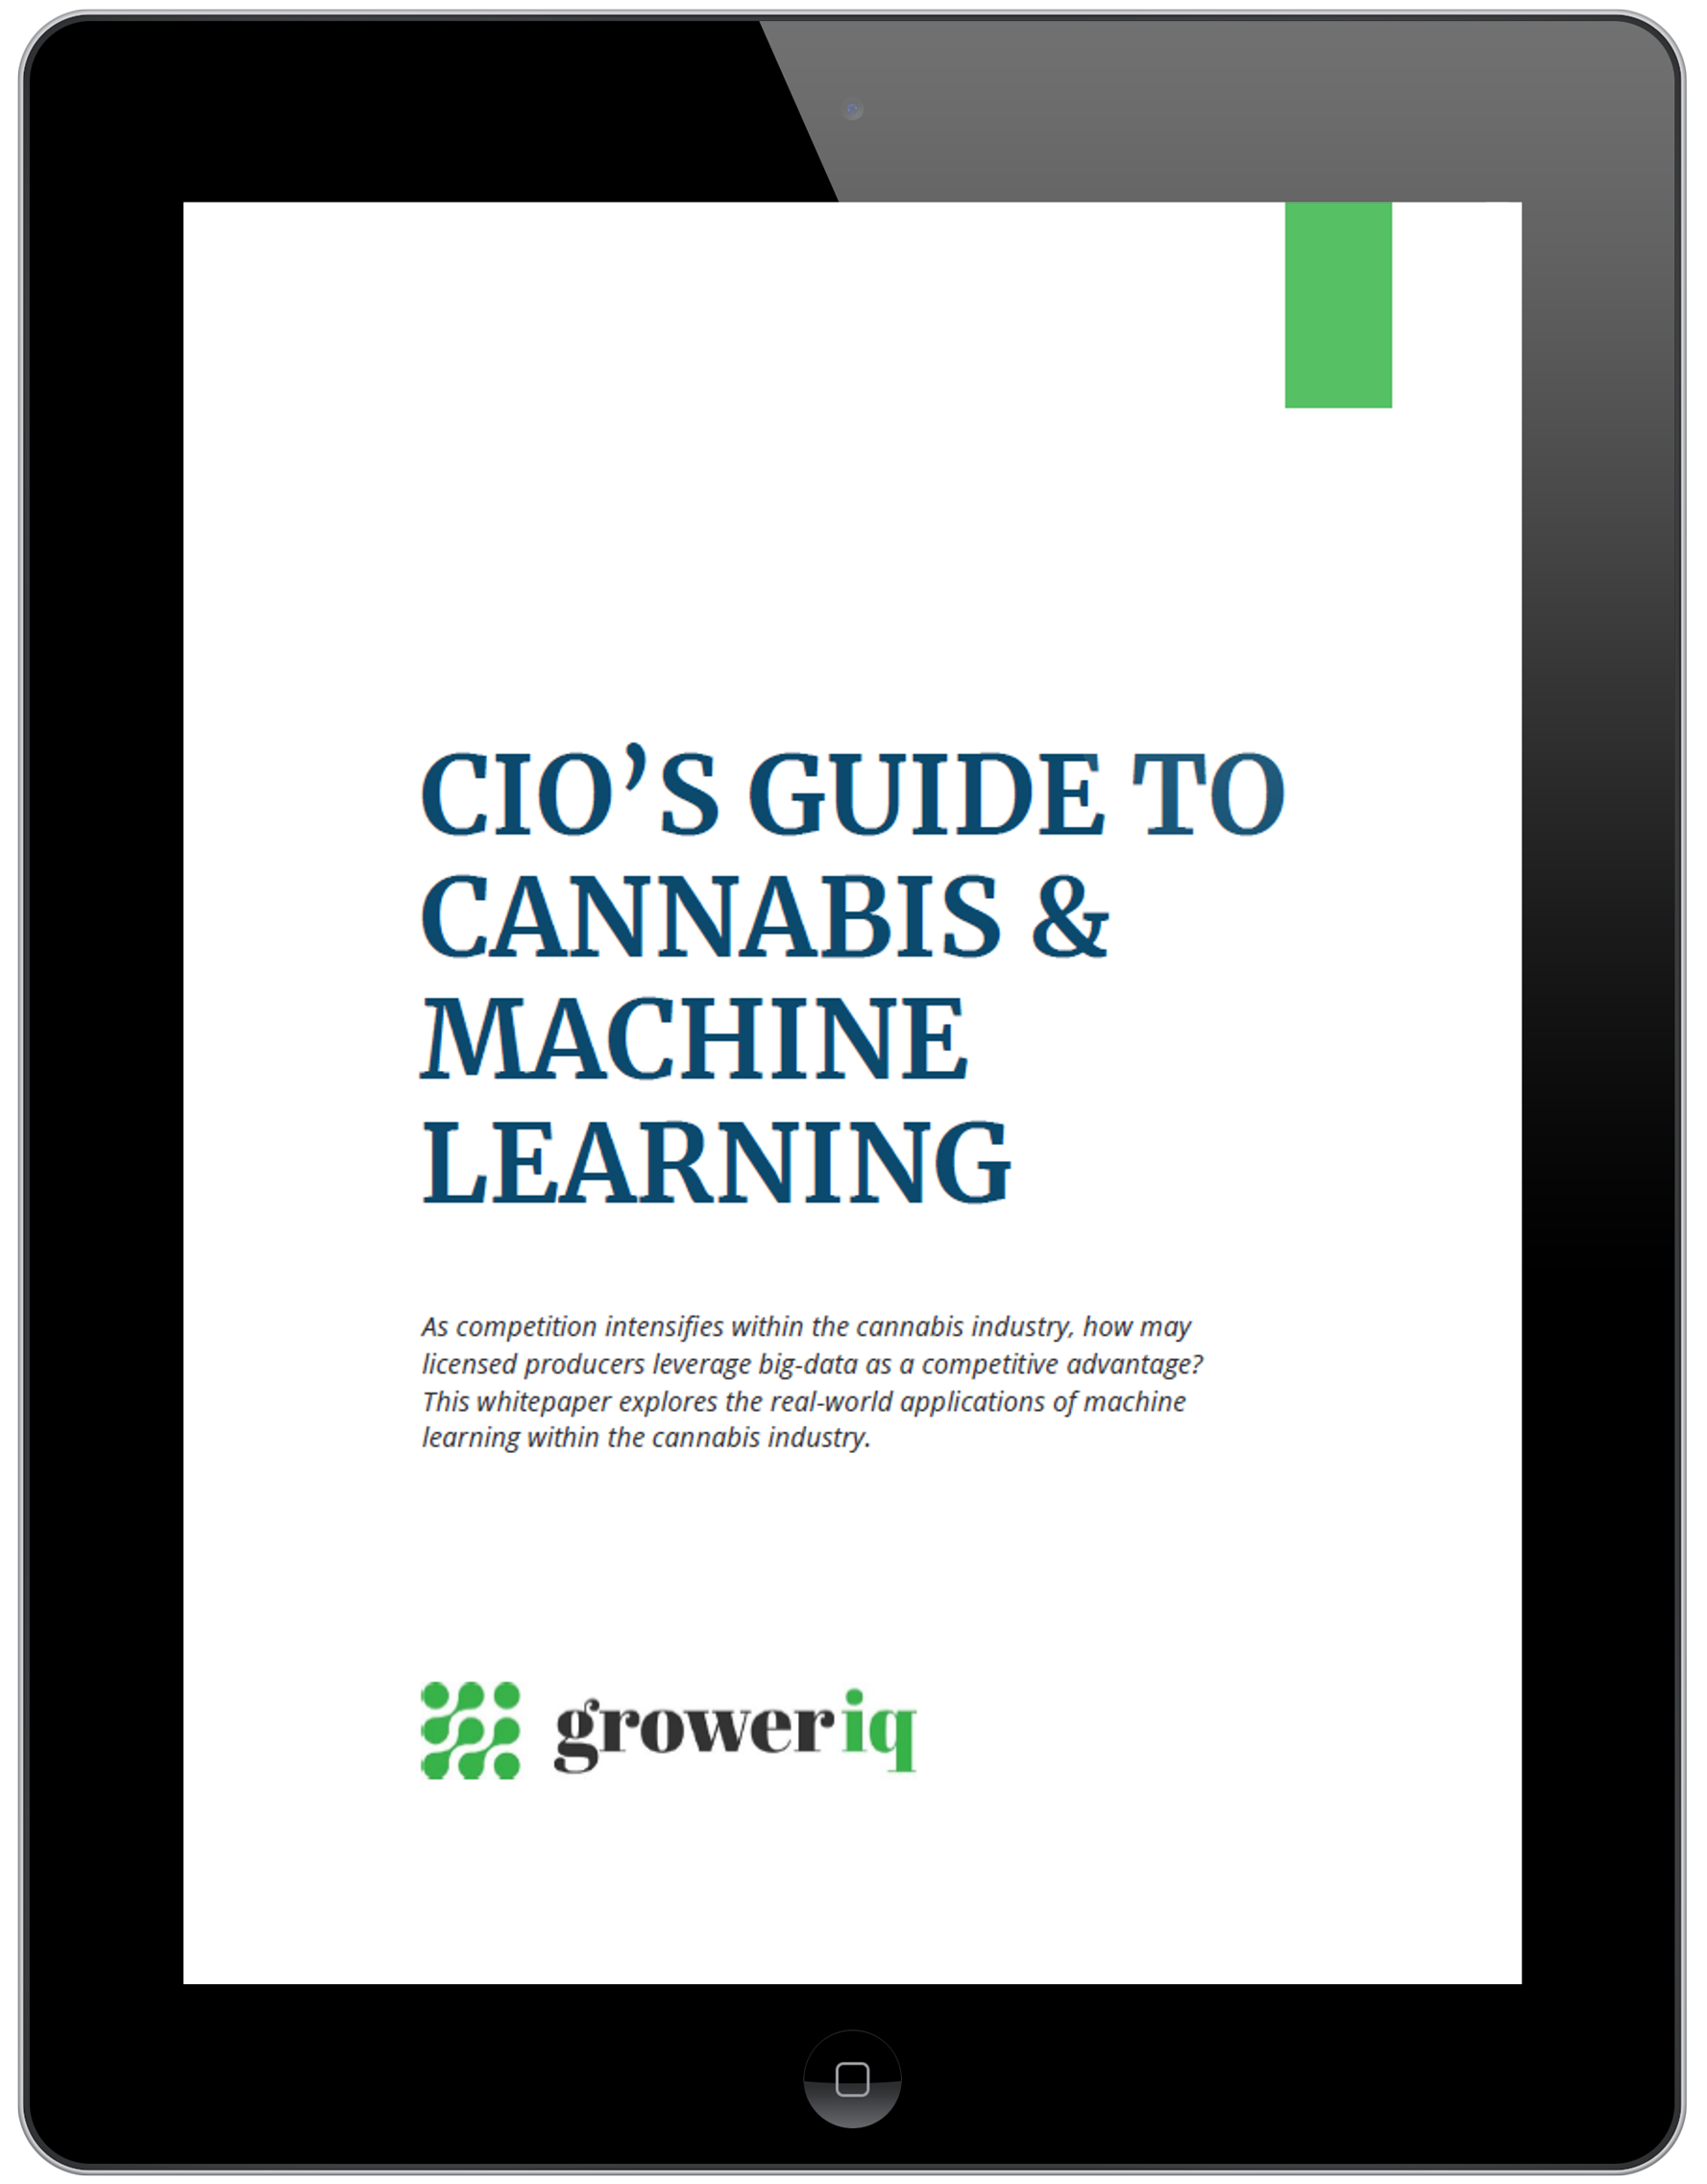 GrowerIQ's CIO's Guide to Cannabis & Machine Learning